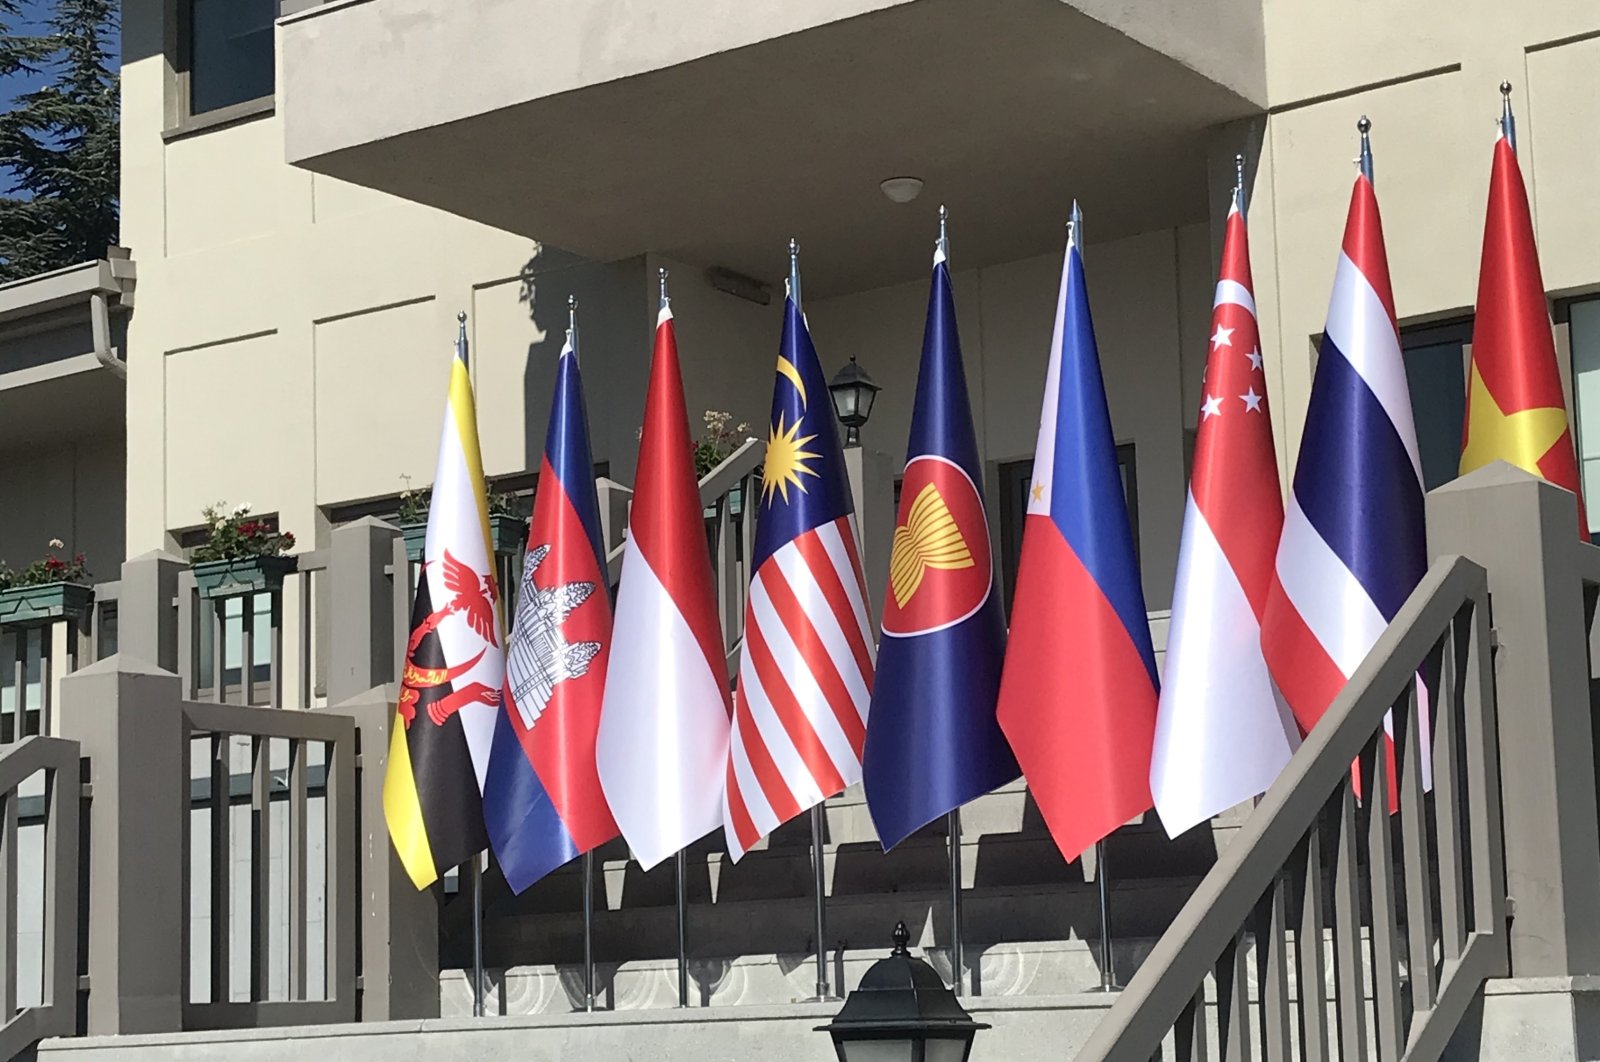 Flags of ASEAN countries are seen in this photo, residence of Indonesia&#039;s Ambassador, Ankara, Türkiye, Sept.8, 2022 (Photo by Dilara Aslan Özer)